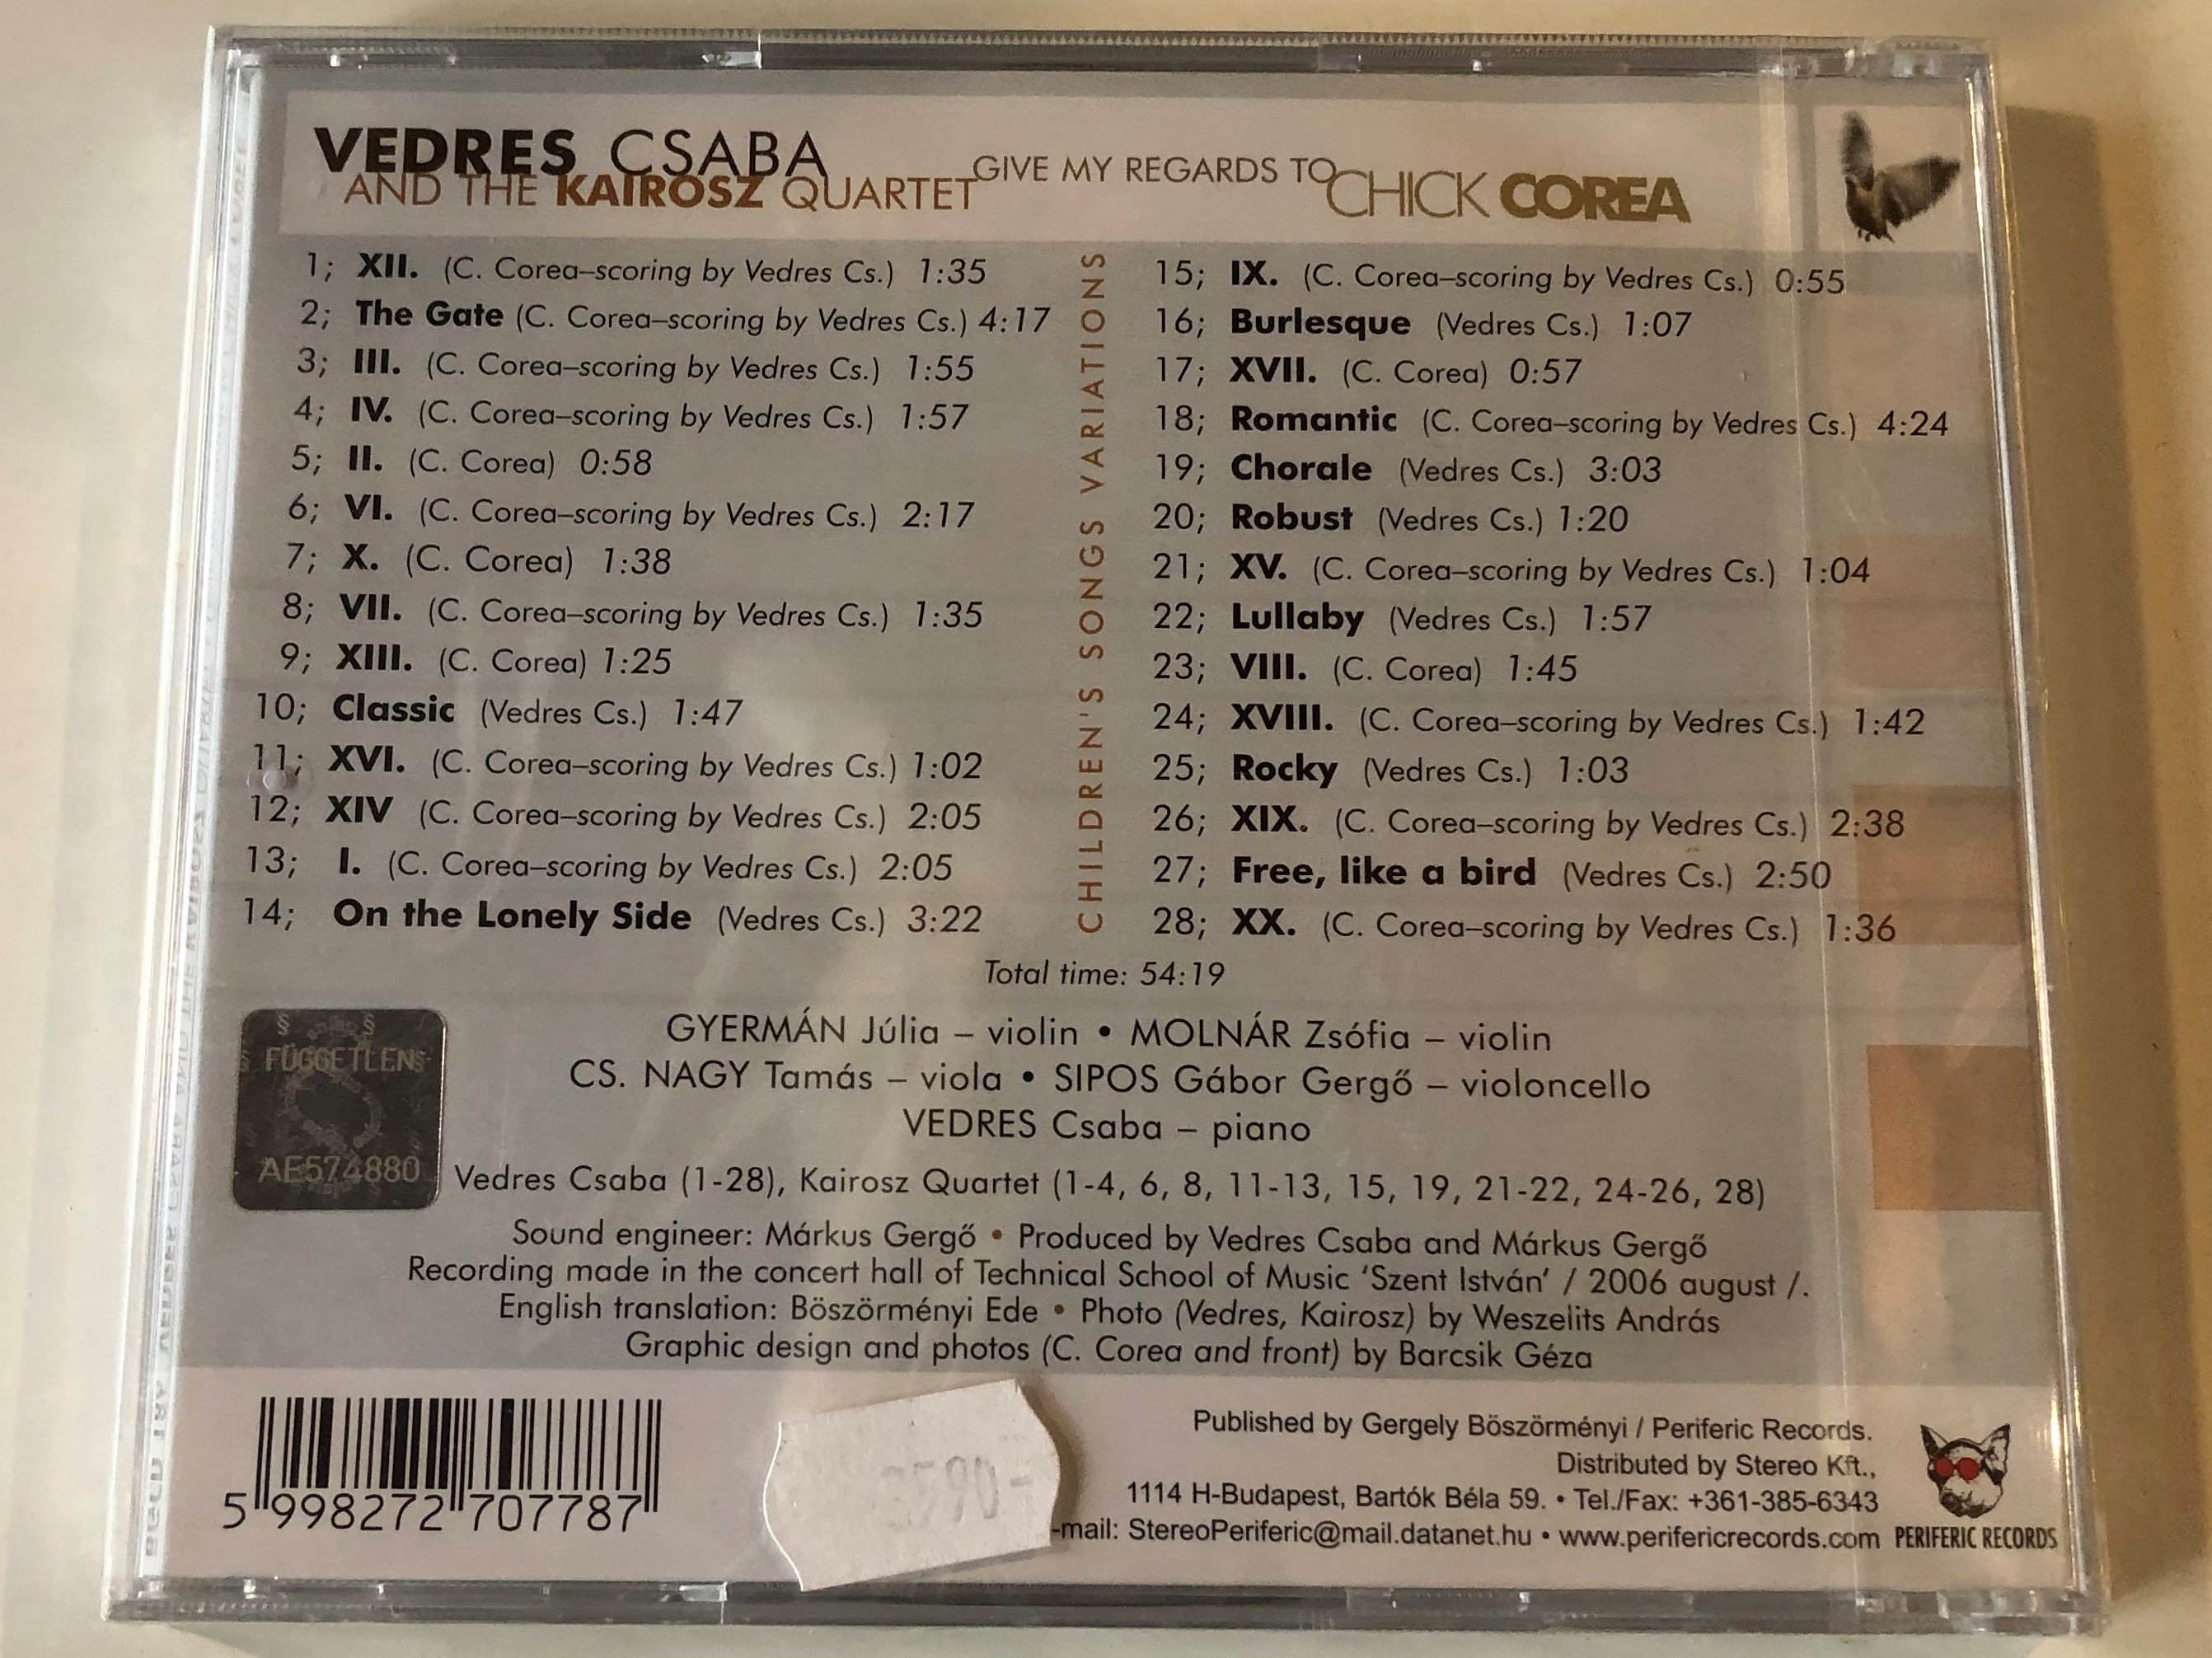 vedres-csaba-the-kairosz-quartet-give-my-regards-to-chick-corea-children-s-songs-variations-periferic-records-audio-cd-2006-bgcd-186-2-.jpg